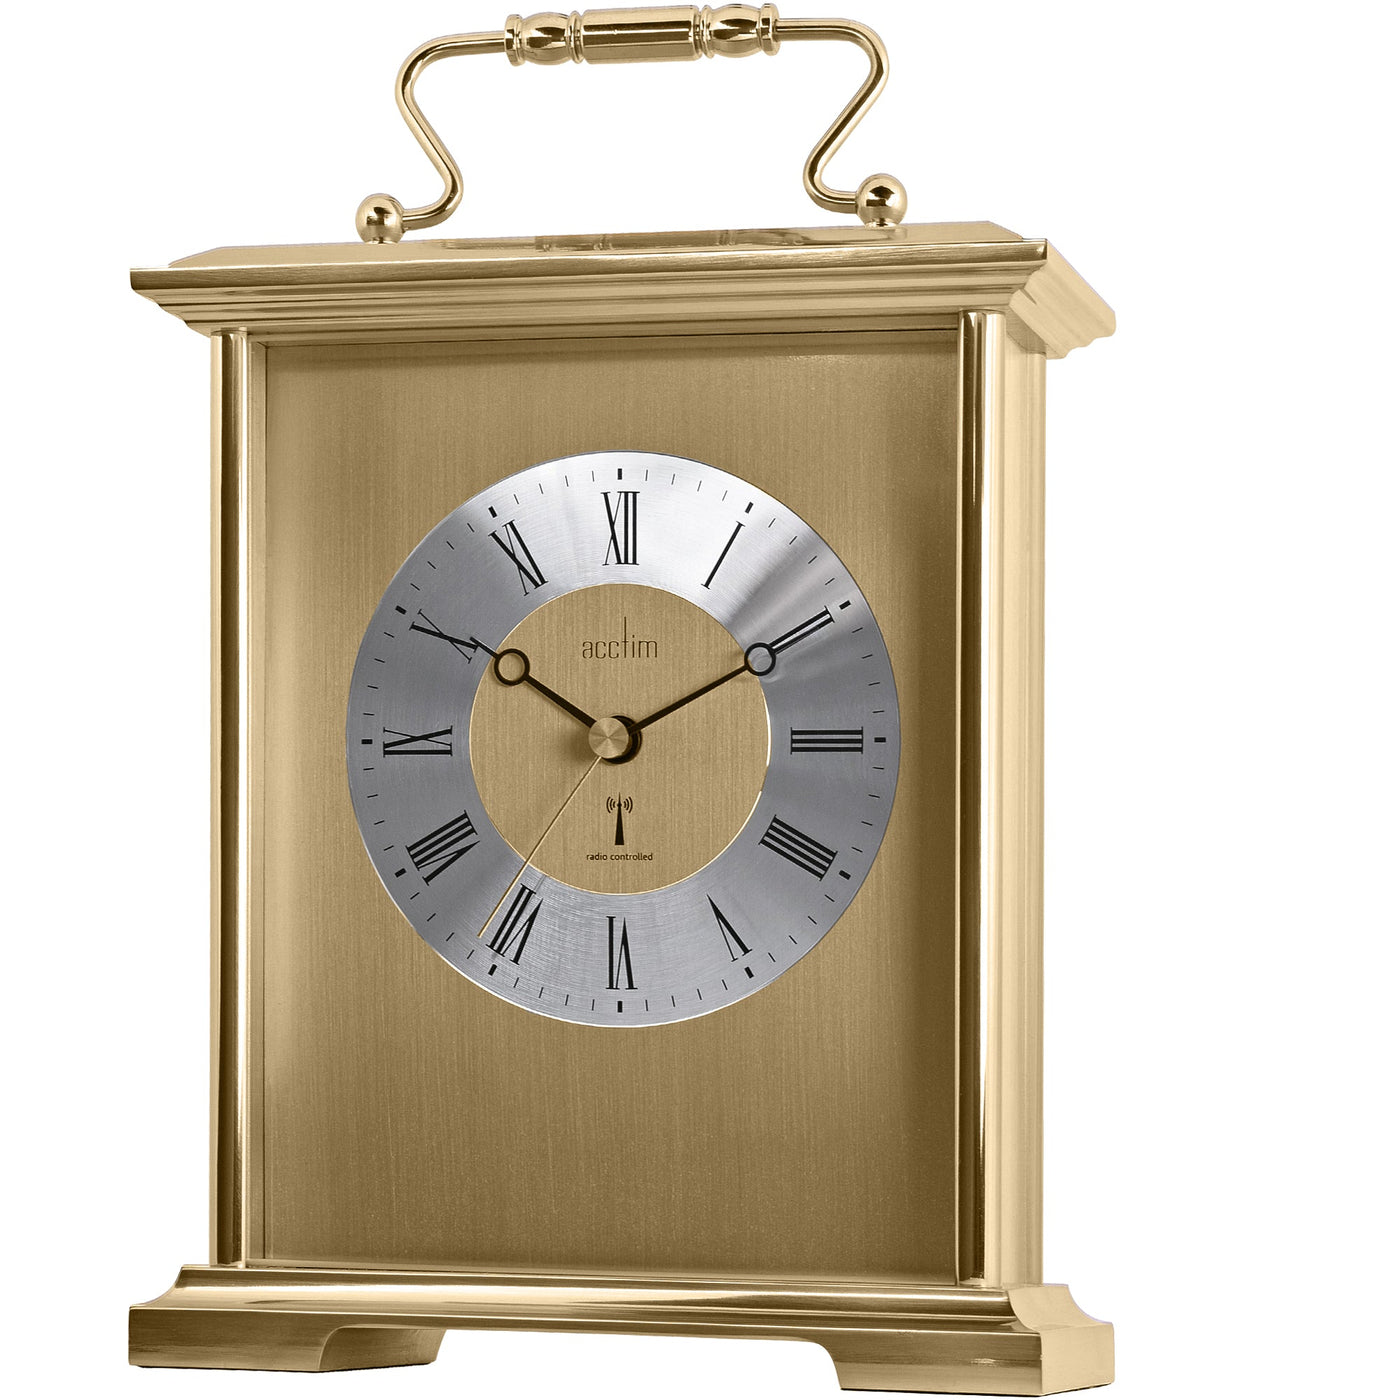 Acctim Althorp Radio Controlled Mantel Table Clock Gold - timeframedclocks